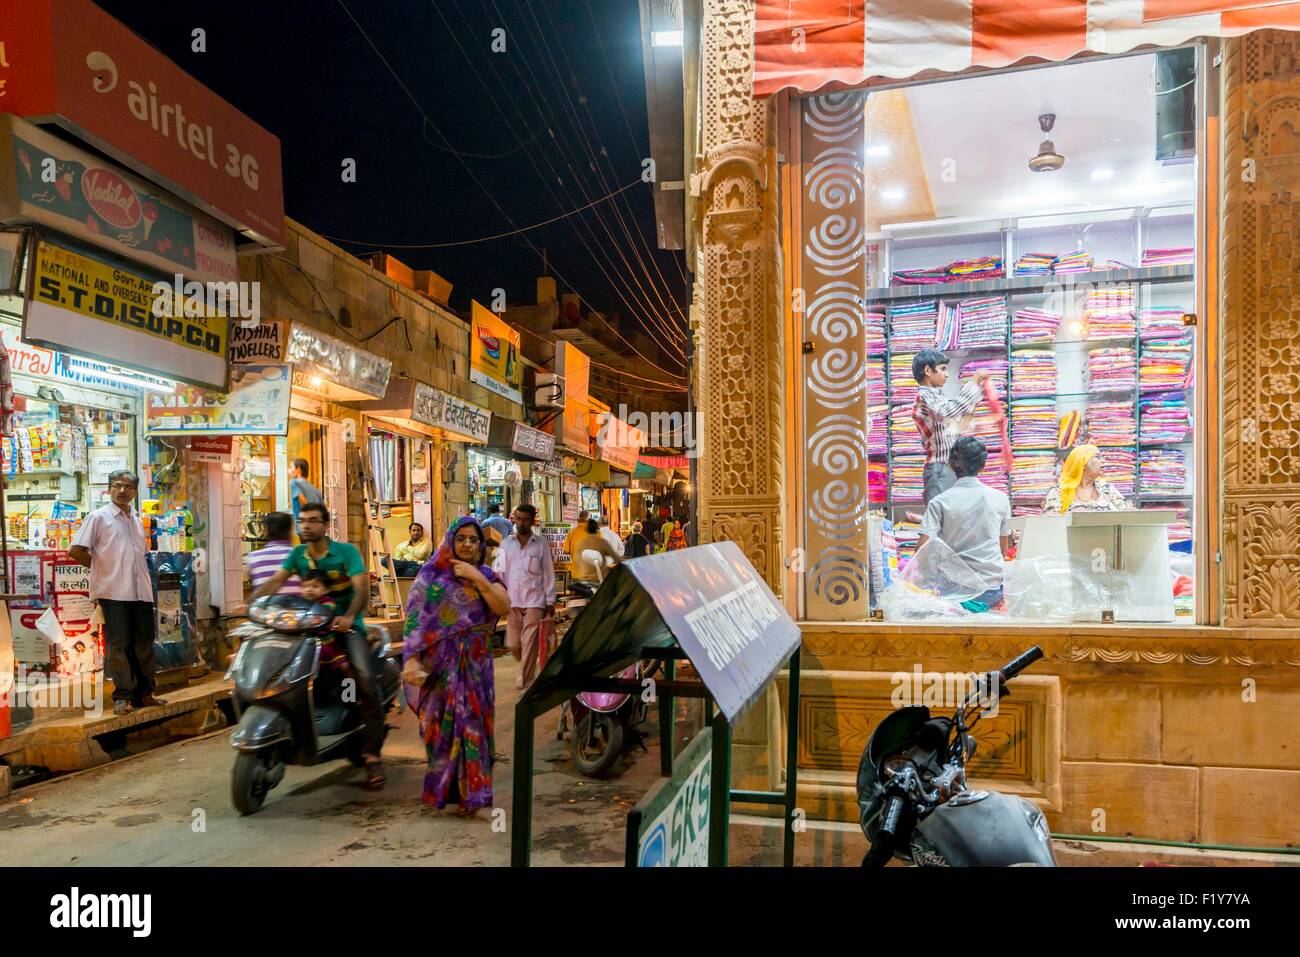 India, Rajasthan state, Jaisalmer, street scene by night Stock Photo